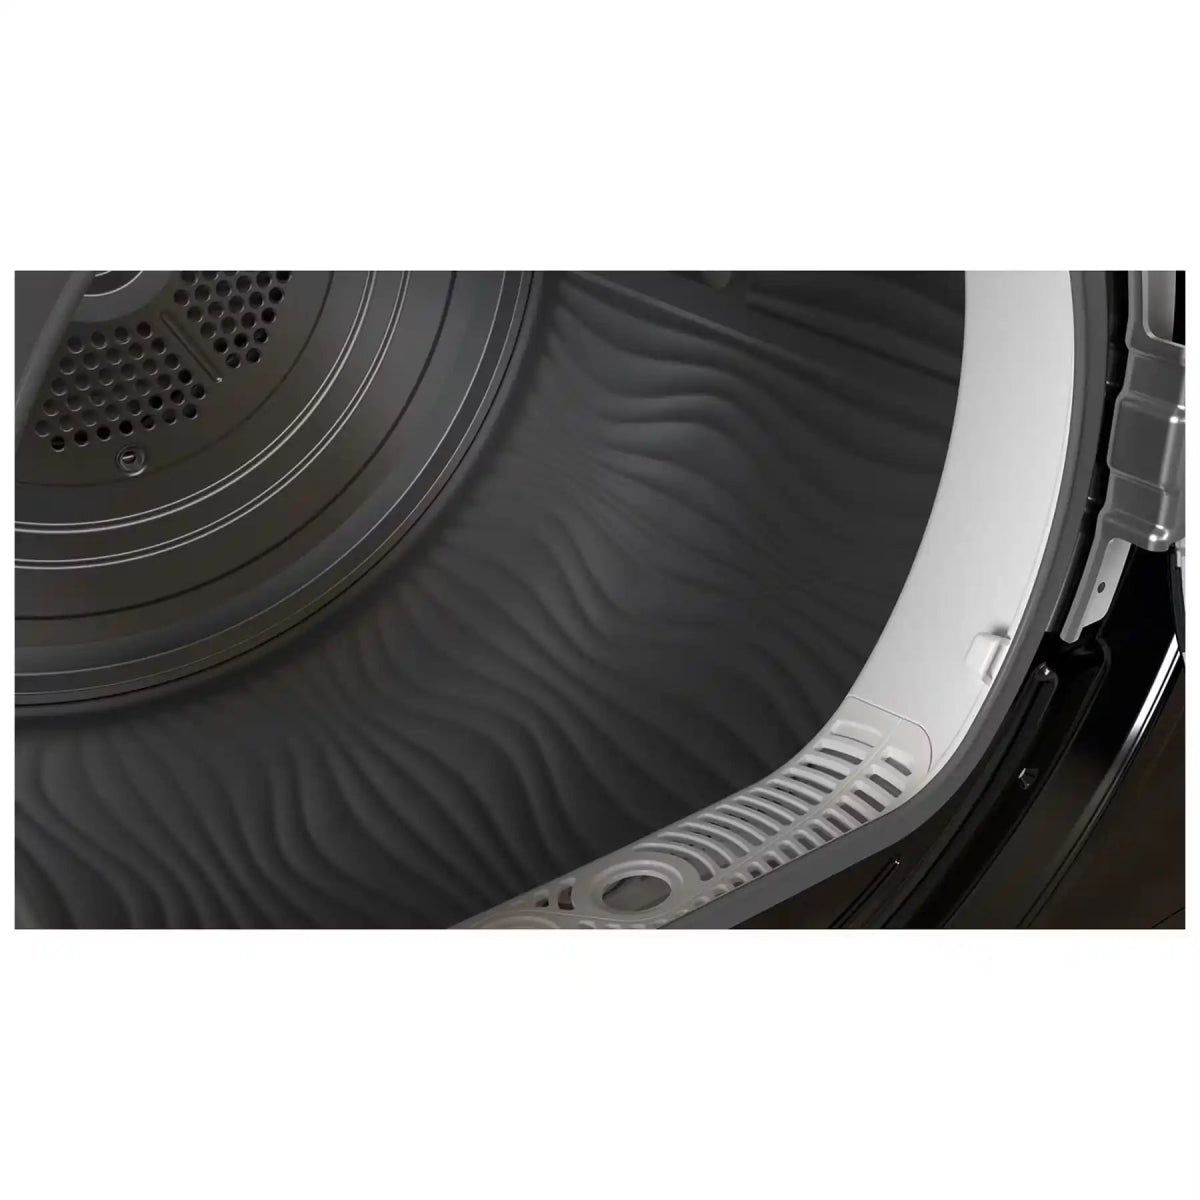 Hotpoint H3D91BUK 9Kg Freestanding Condenser Tumble Dryer - Black - Atlantic Electrics